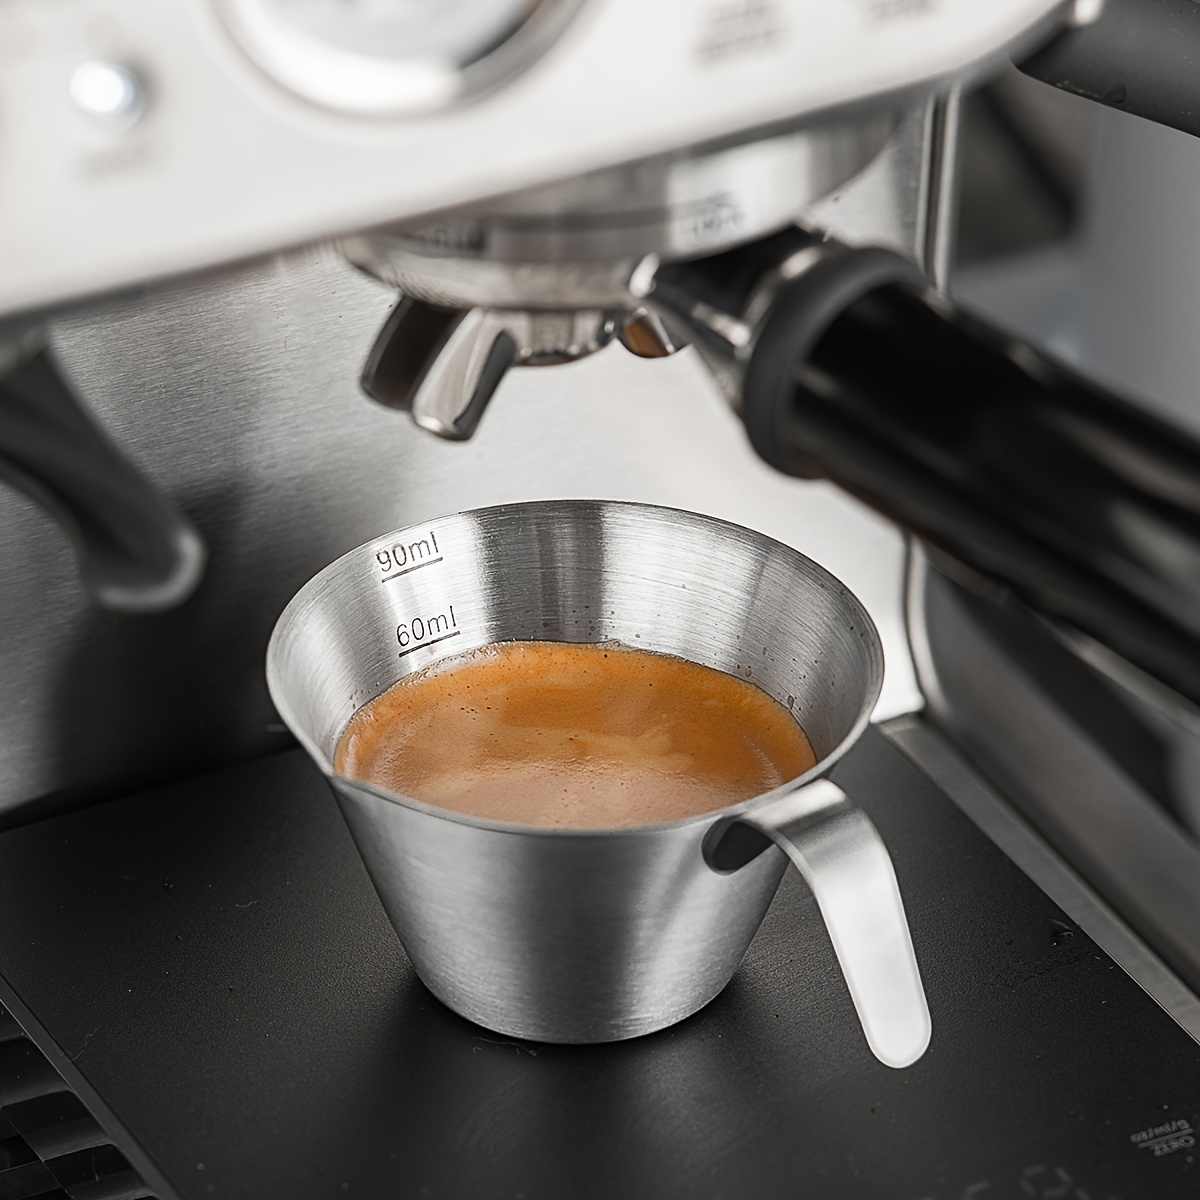 1 Cup (8 Oz.  250 mL) Scoop for Measuring Coffee, Pet Food